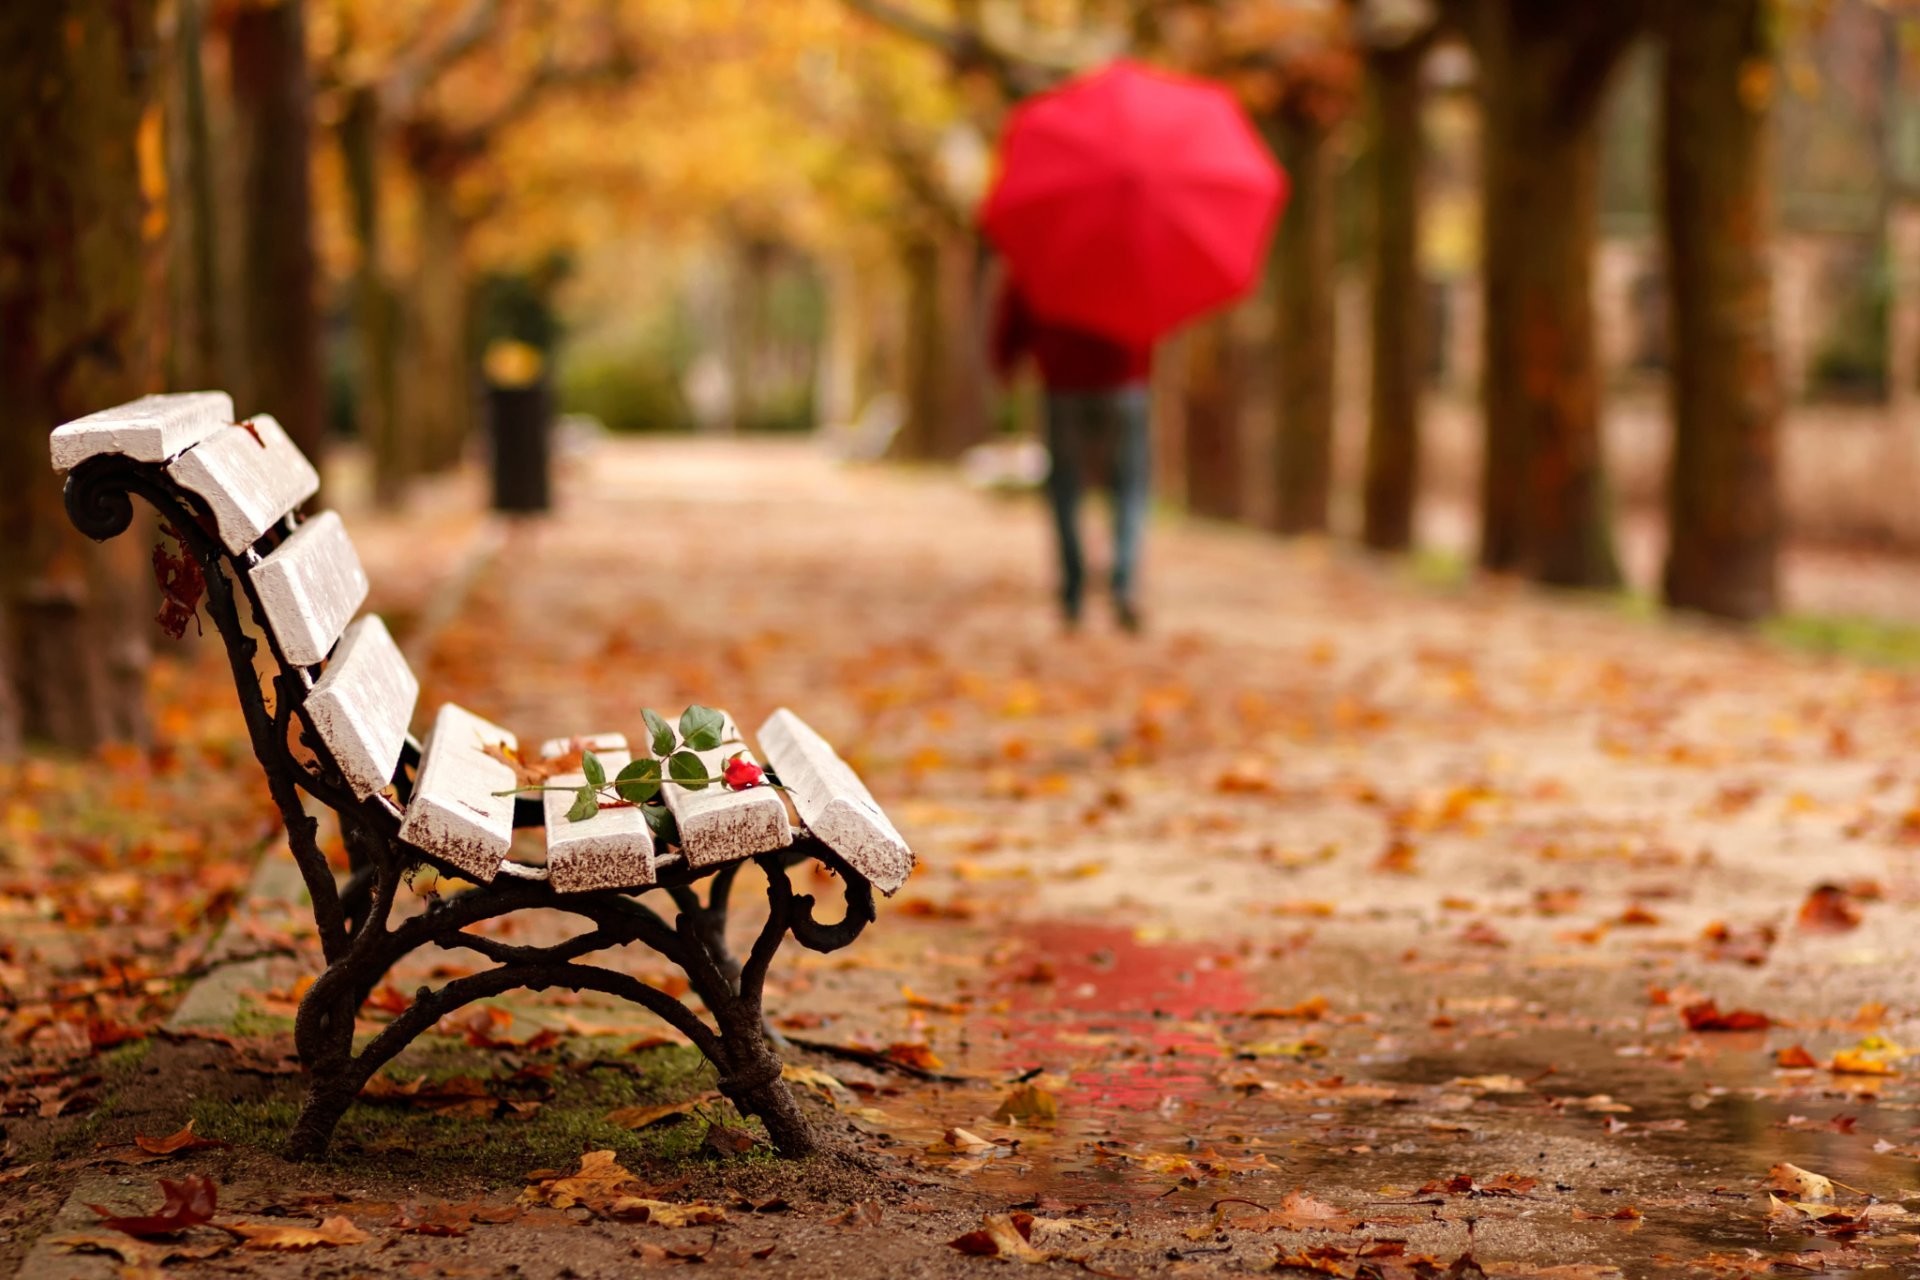 1920x1280 adios goodbye park bench flower rose man maintenance umbrella autumn